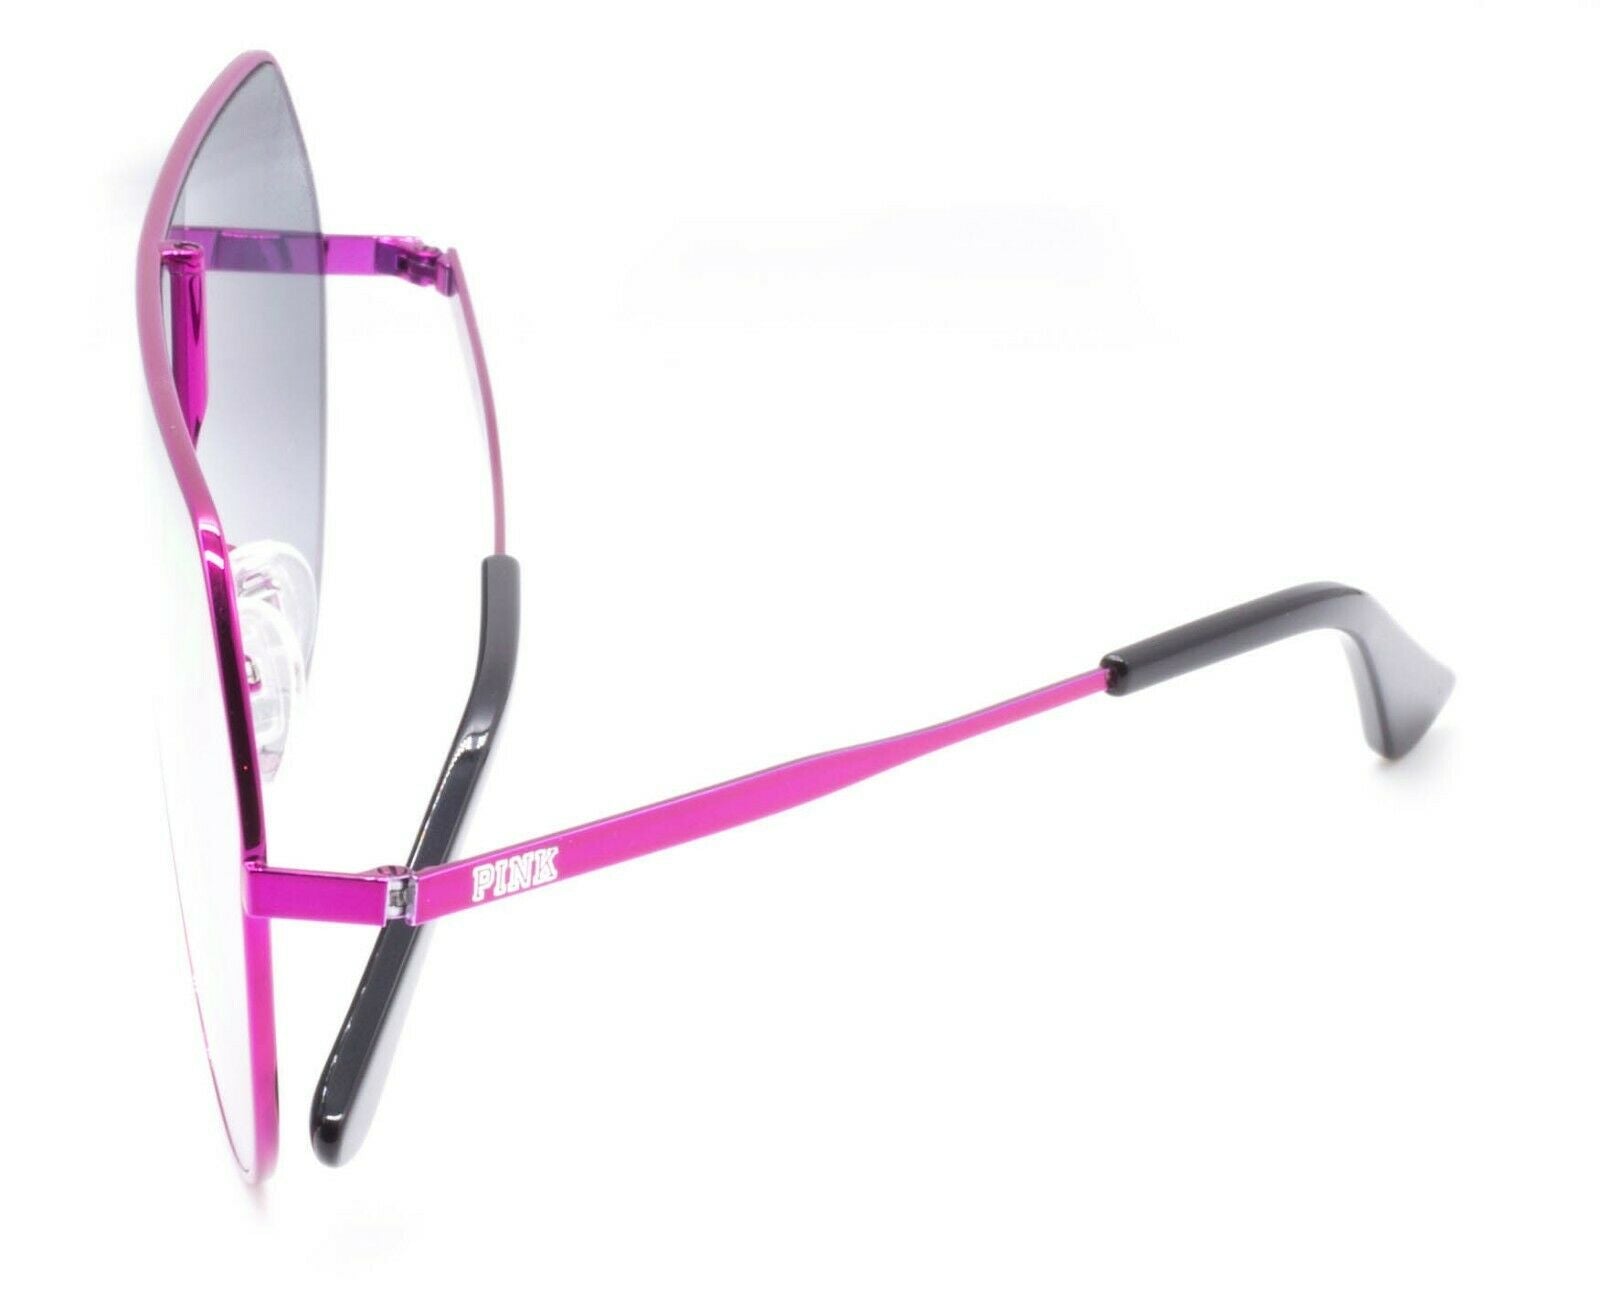 PINK VICTORIA'S SECRET PK0001 72T 140mm Fashion Accessory Sunglasses Shades -New